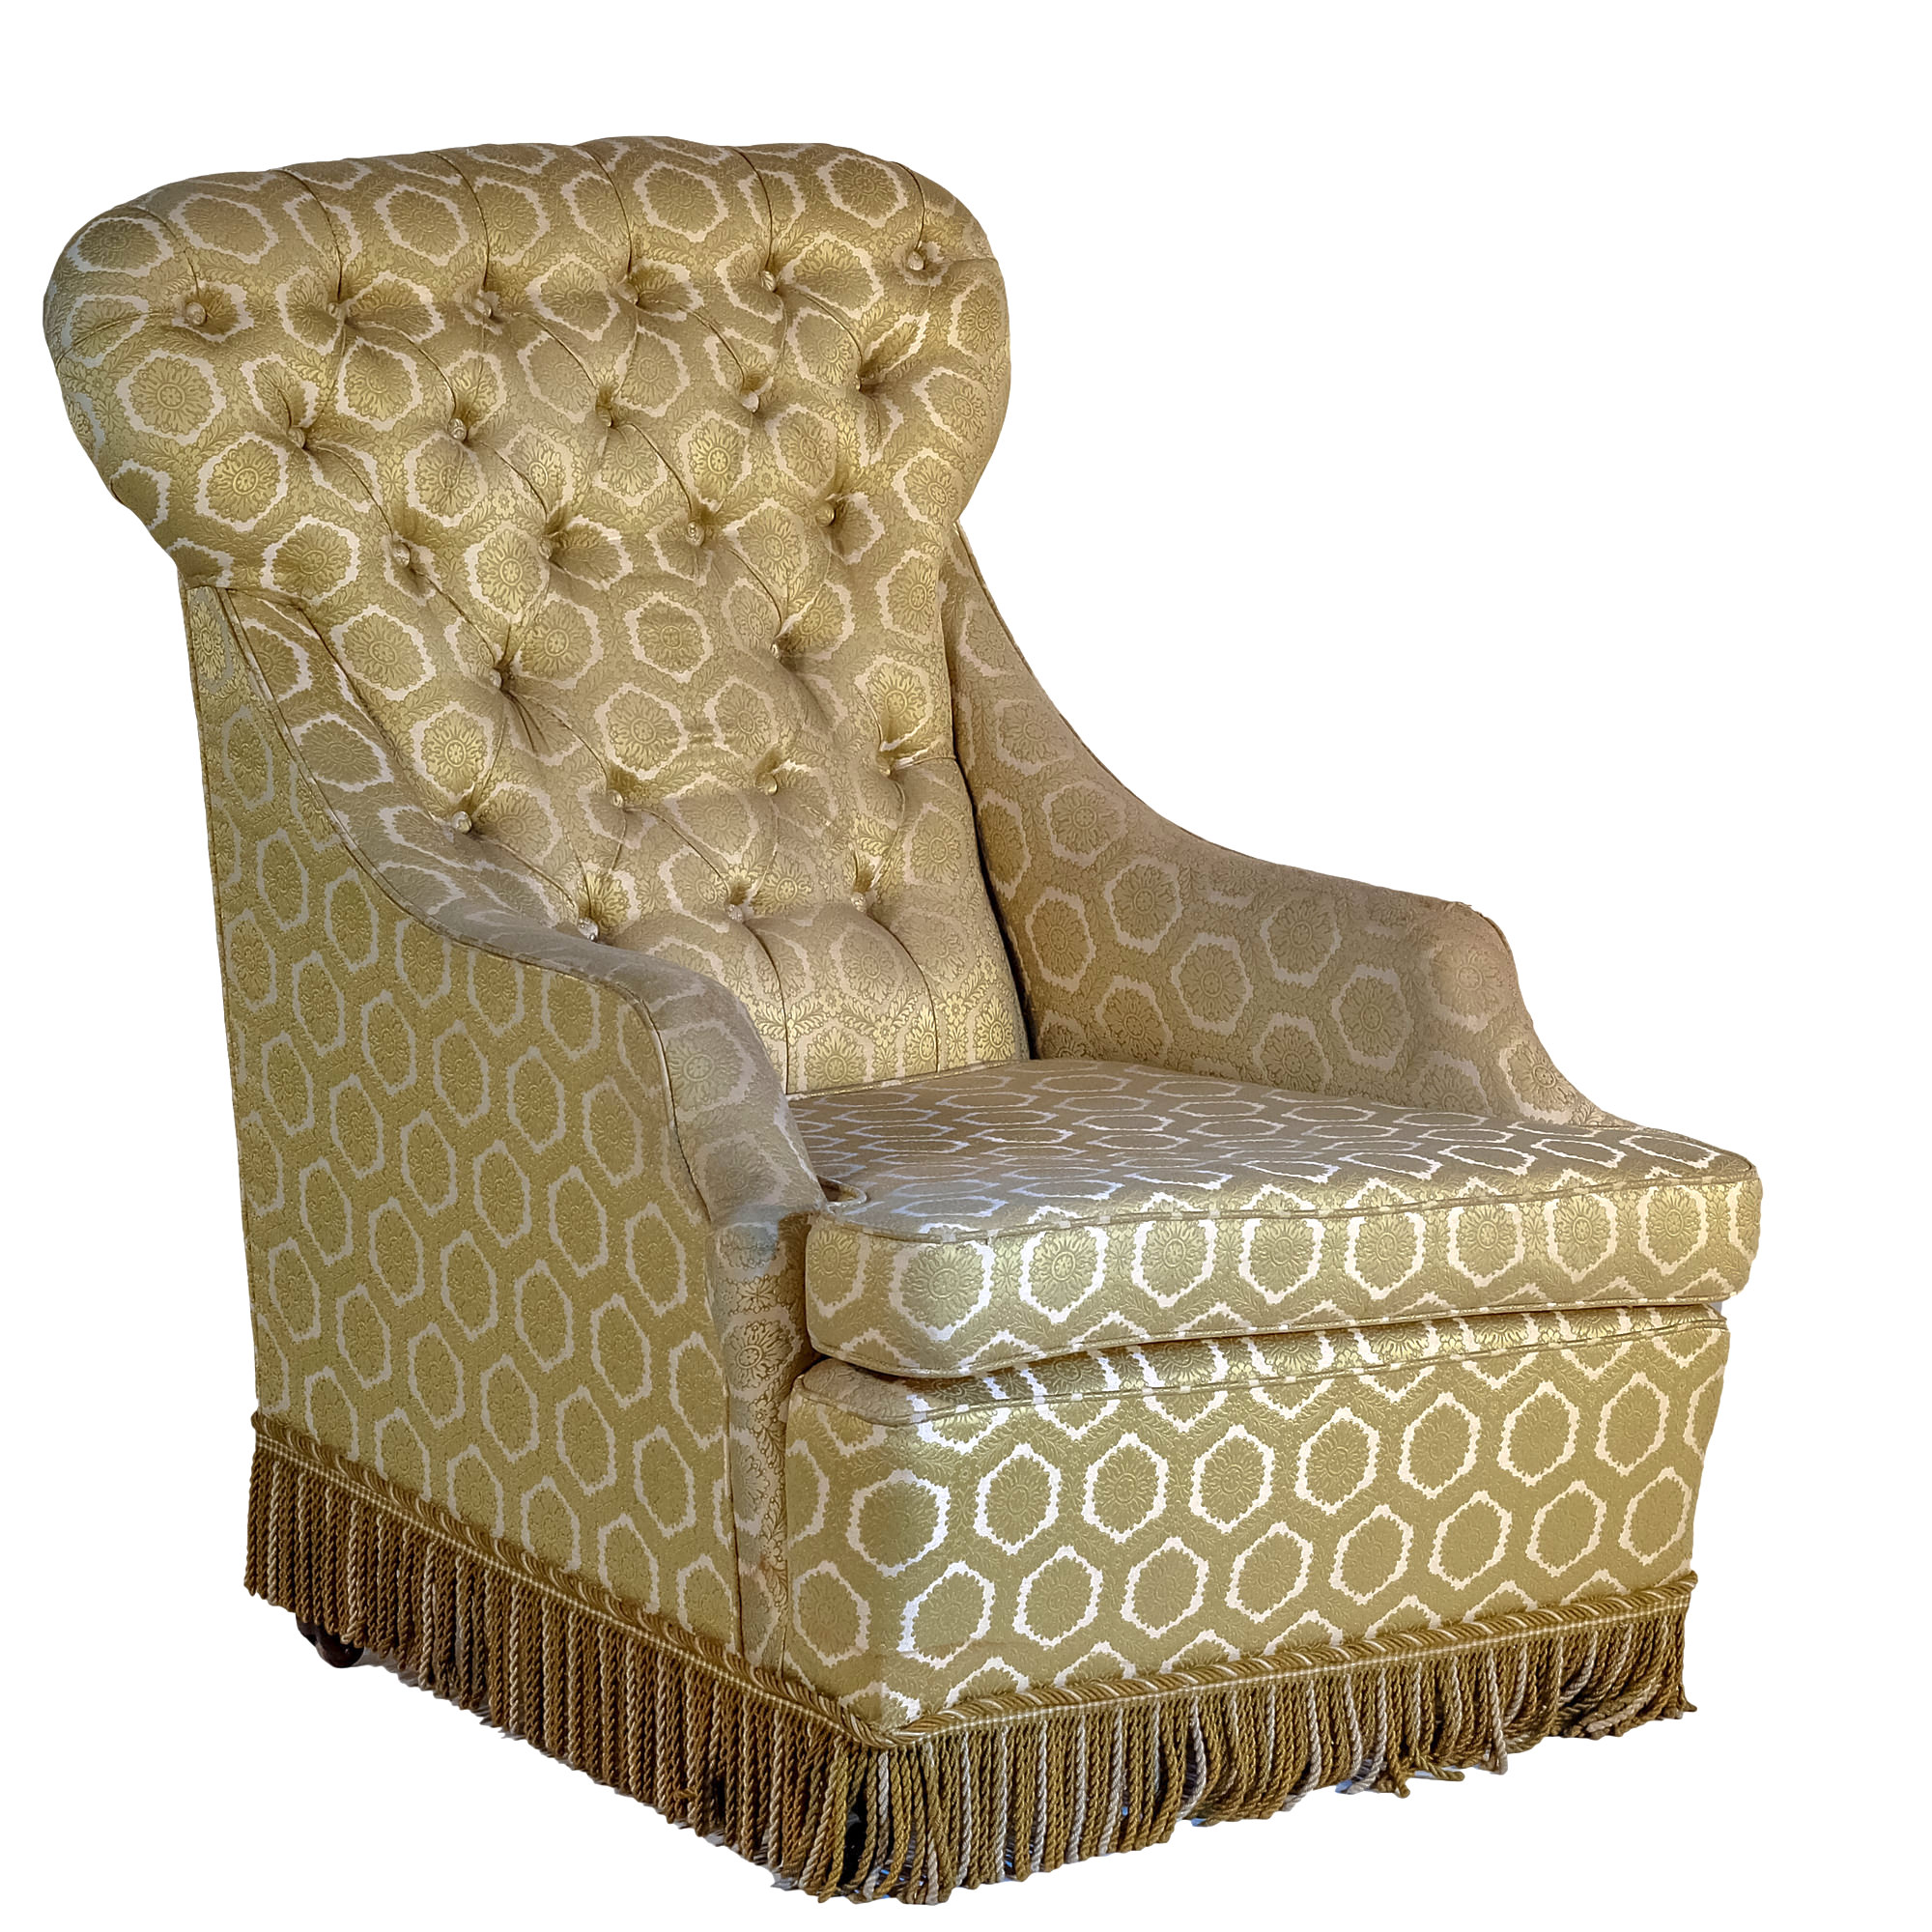 'Satin Brocade Upholstered Edwardian Lounge Chair Circa 1910'